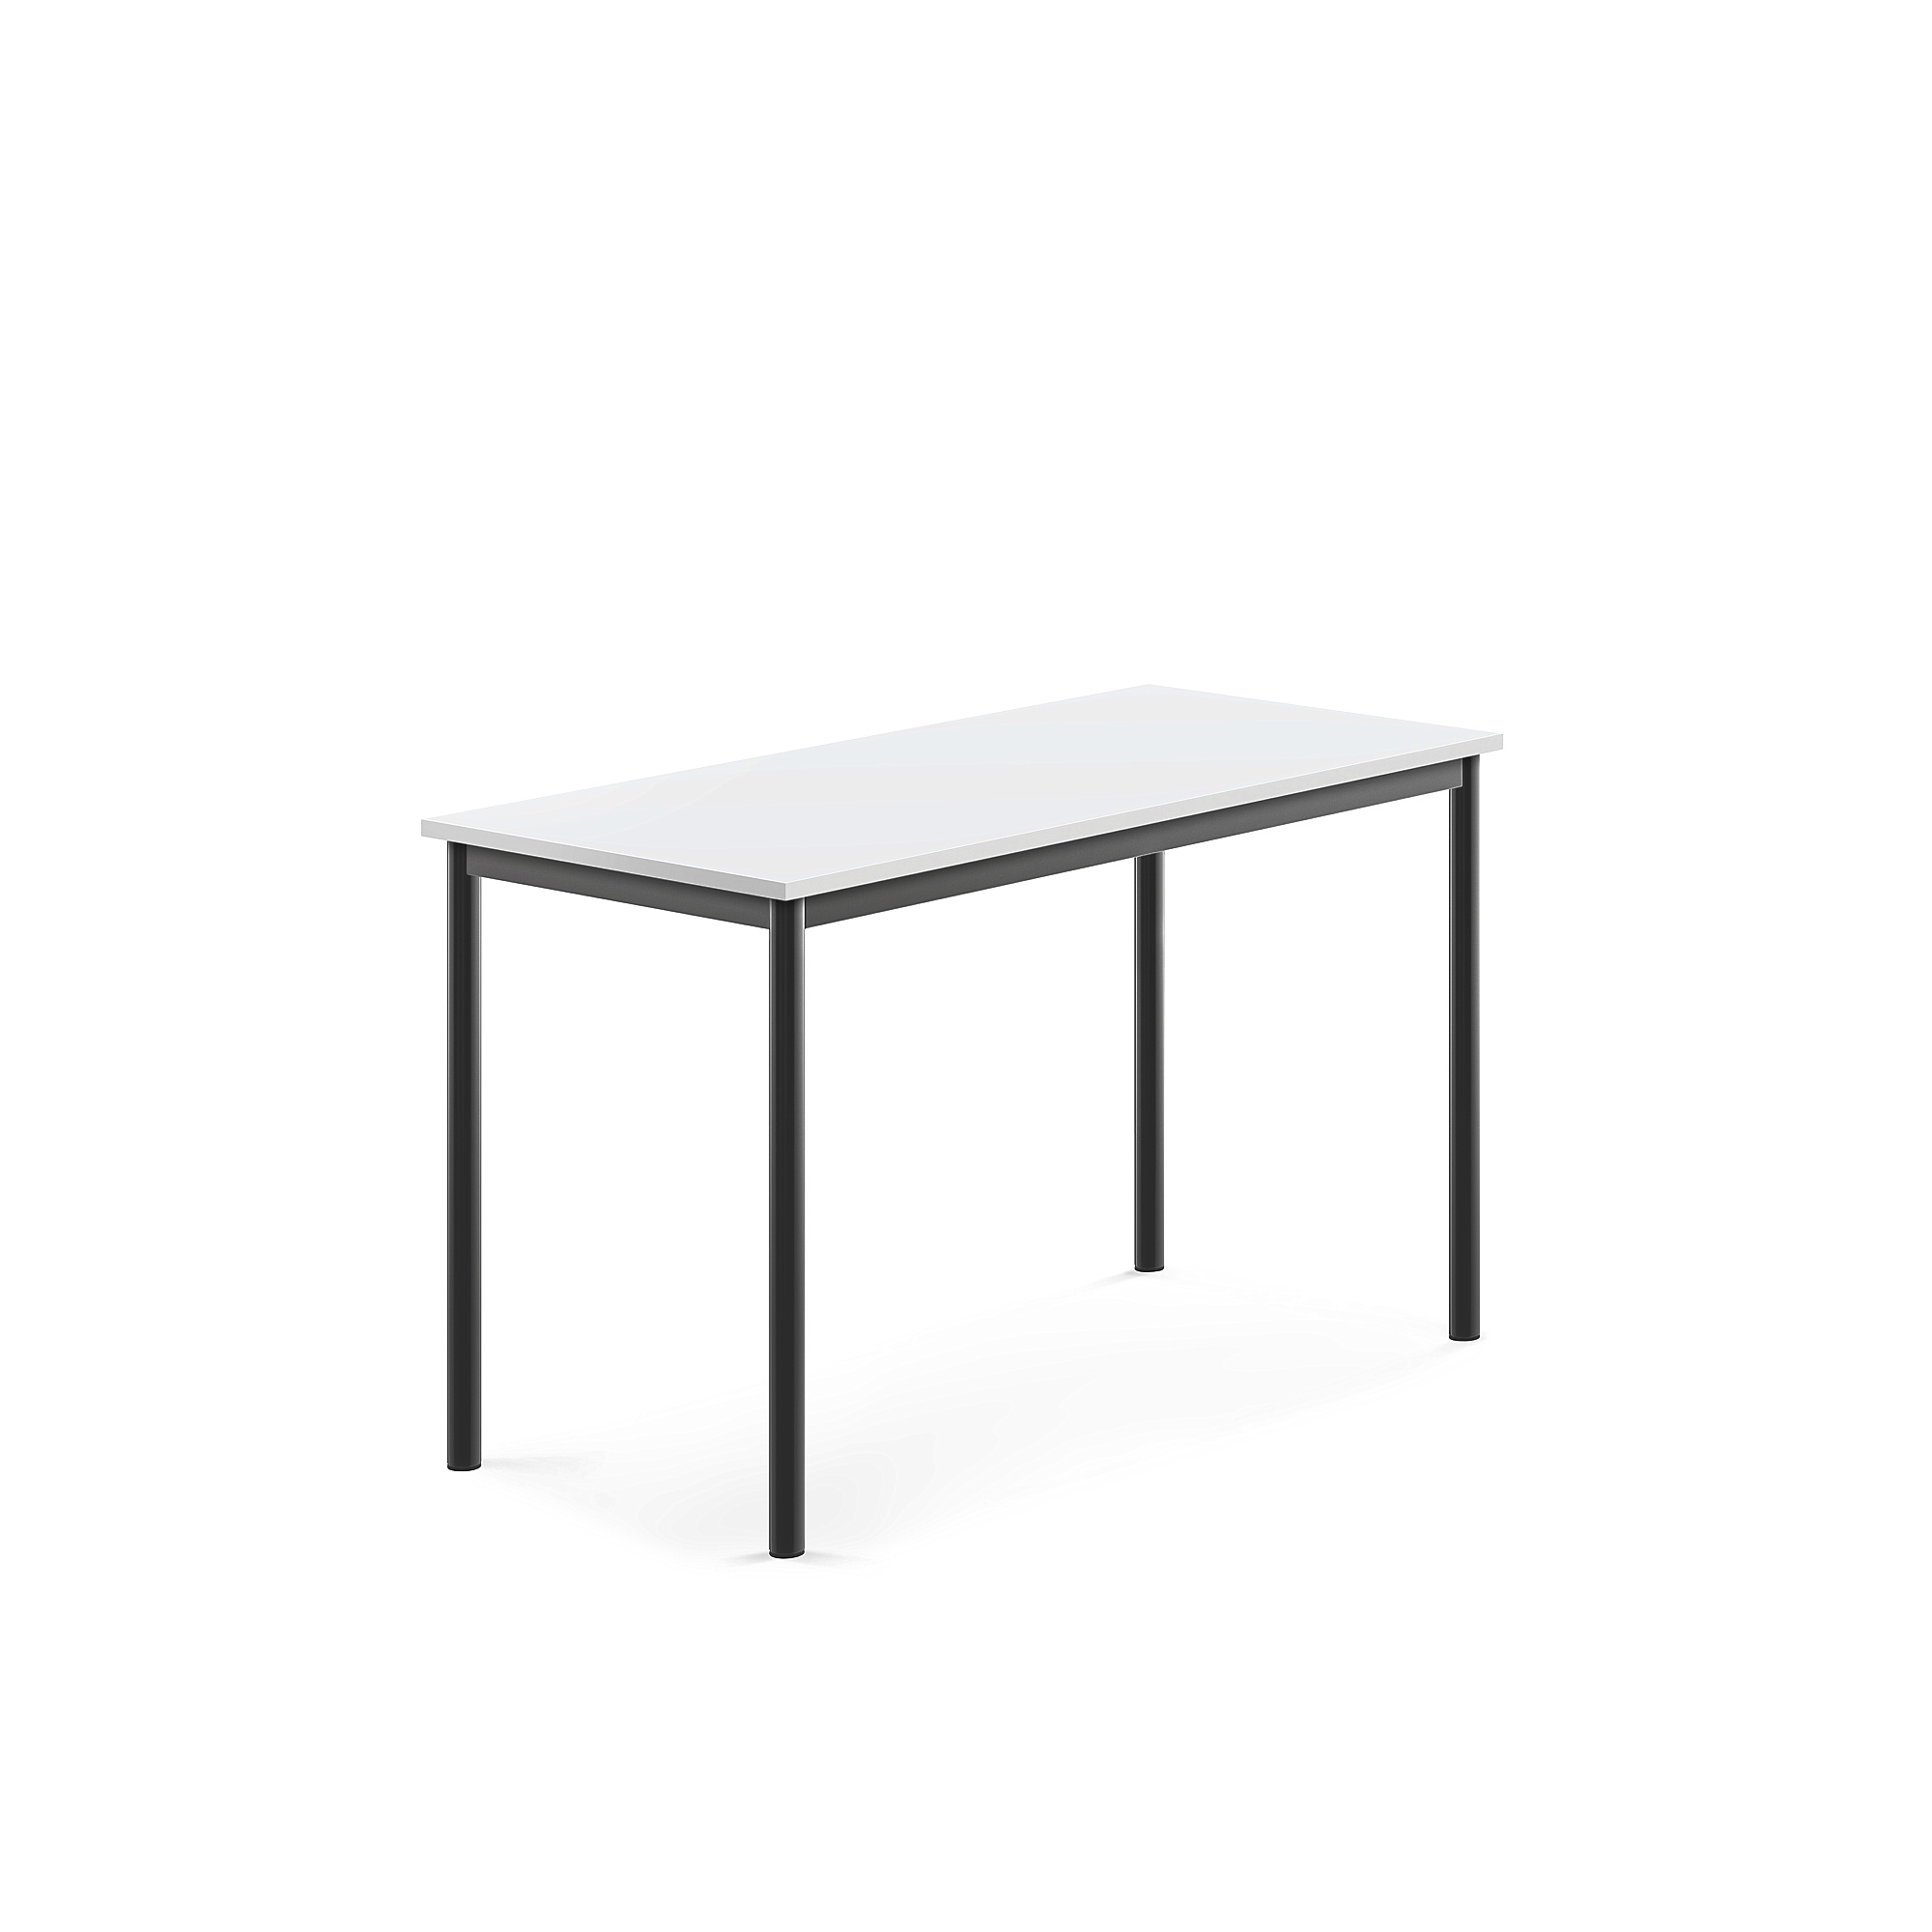 Stůl BORÅS, 1200x600x720 mm, antracitově šedé nohy, HPL deska, bílá